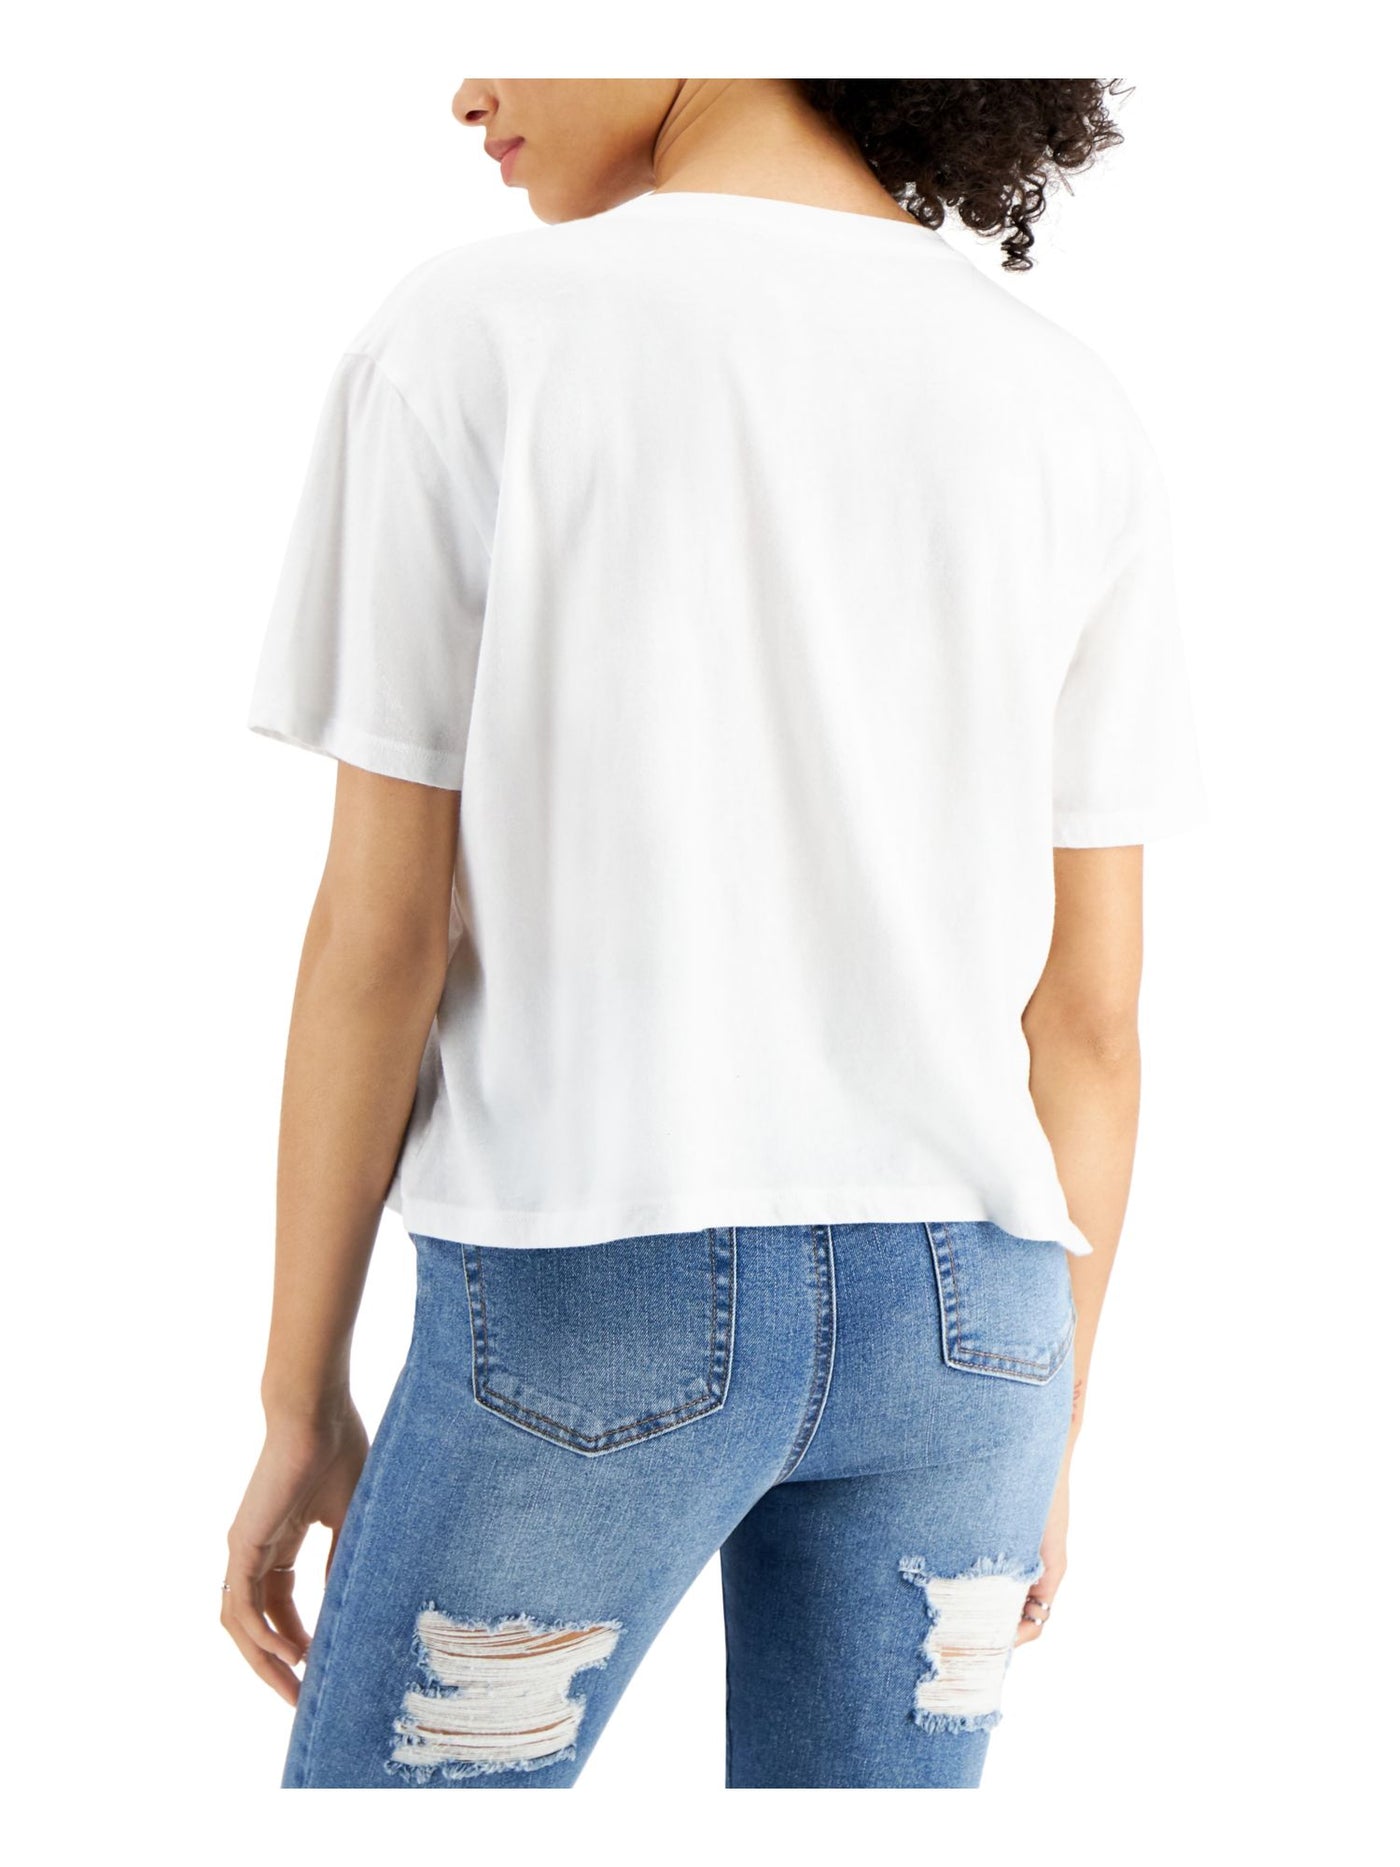 BLACK LABEL Womens White Cotton Blend Printed Short Sleeve Crew Neck T-Shirt M